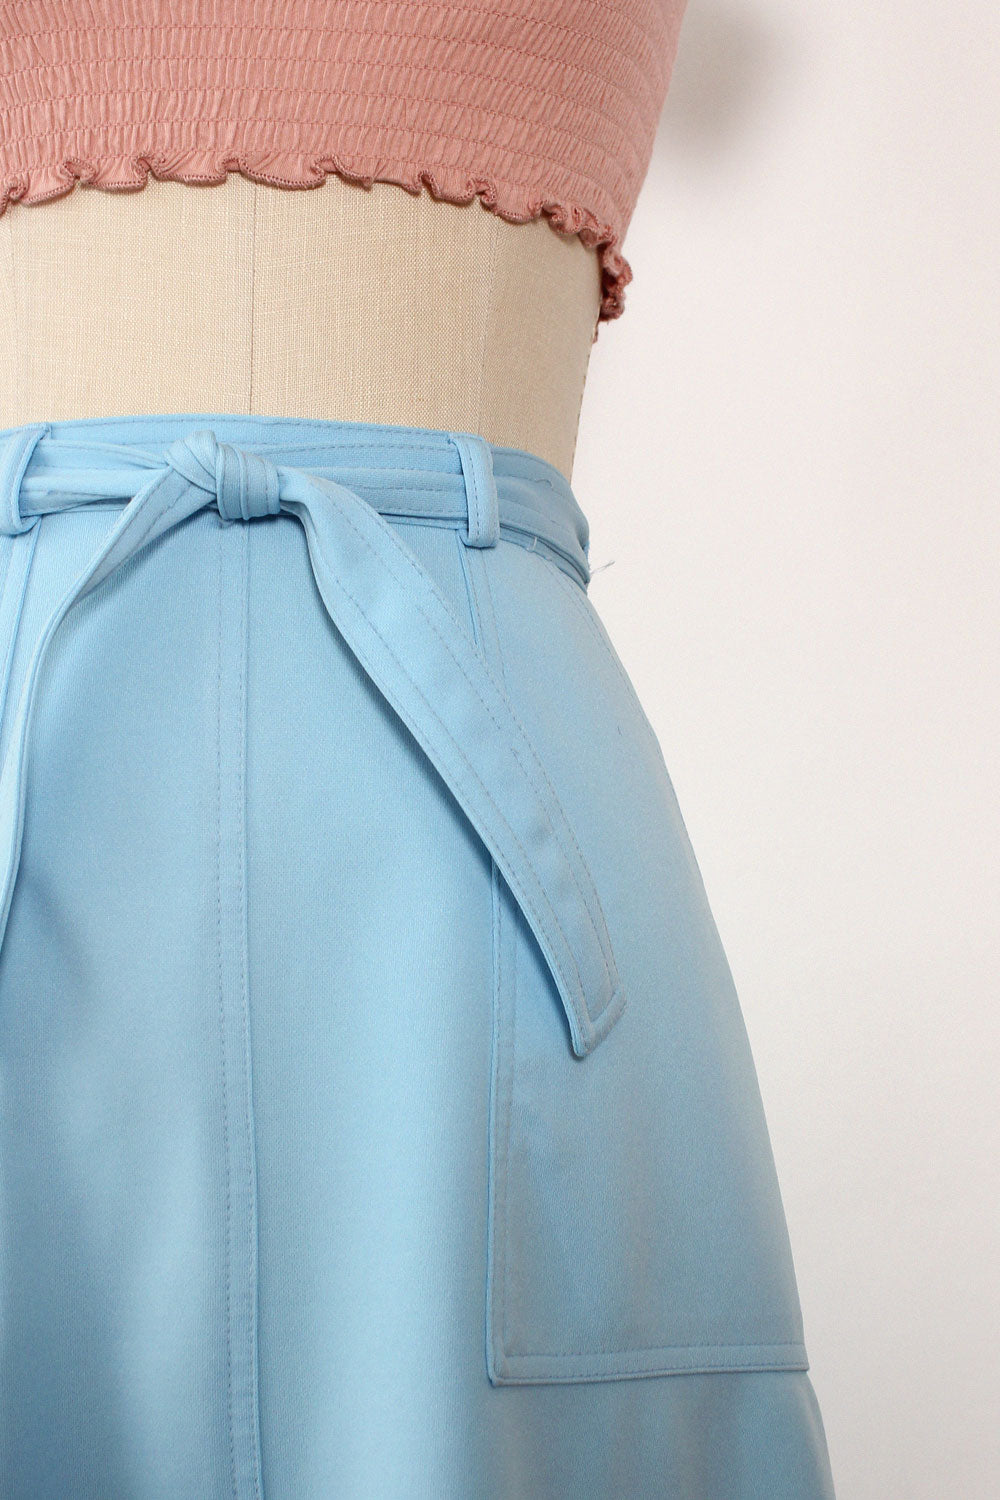 Sky Blue Wrap Skirt M/L